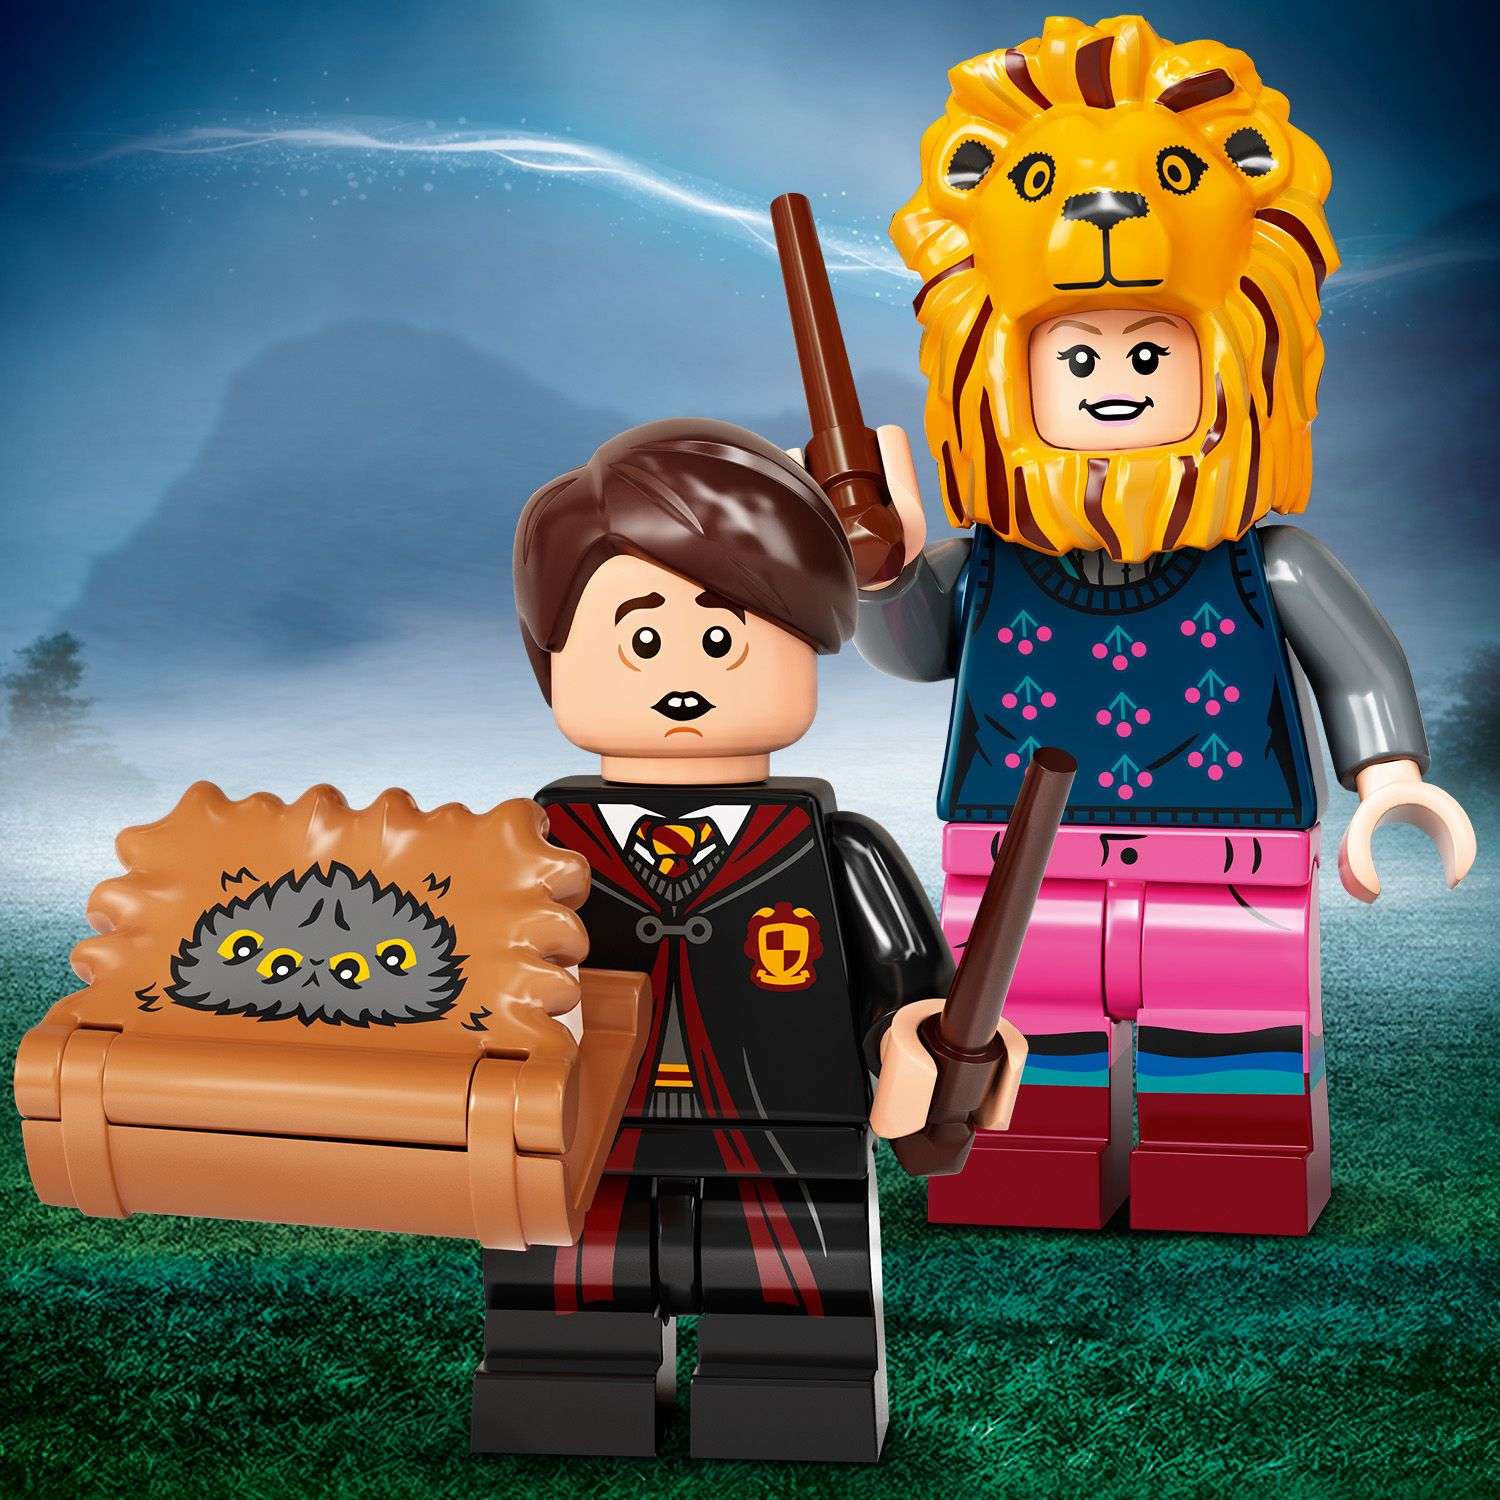 Конструктор LEGO Minifigures Harry Potter 2 71028 - фото 10